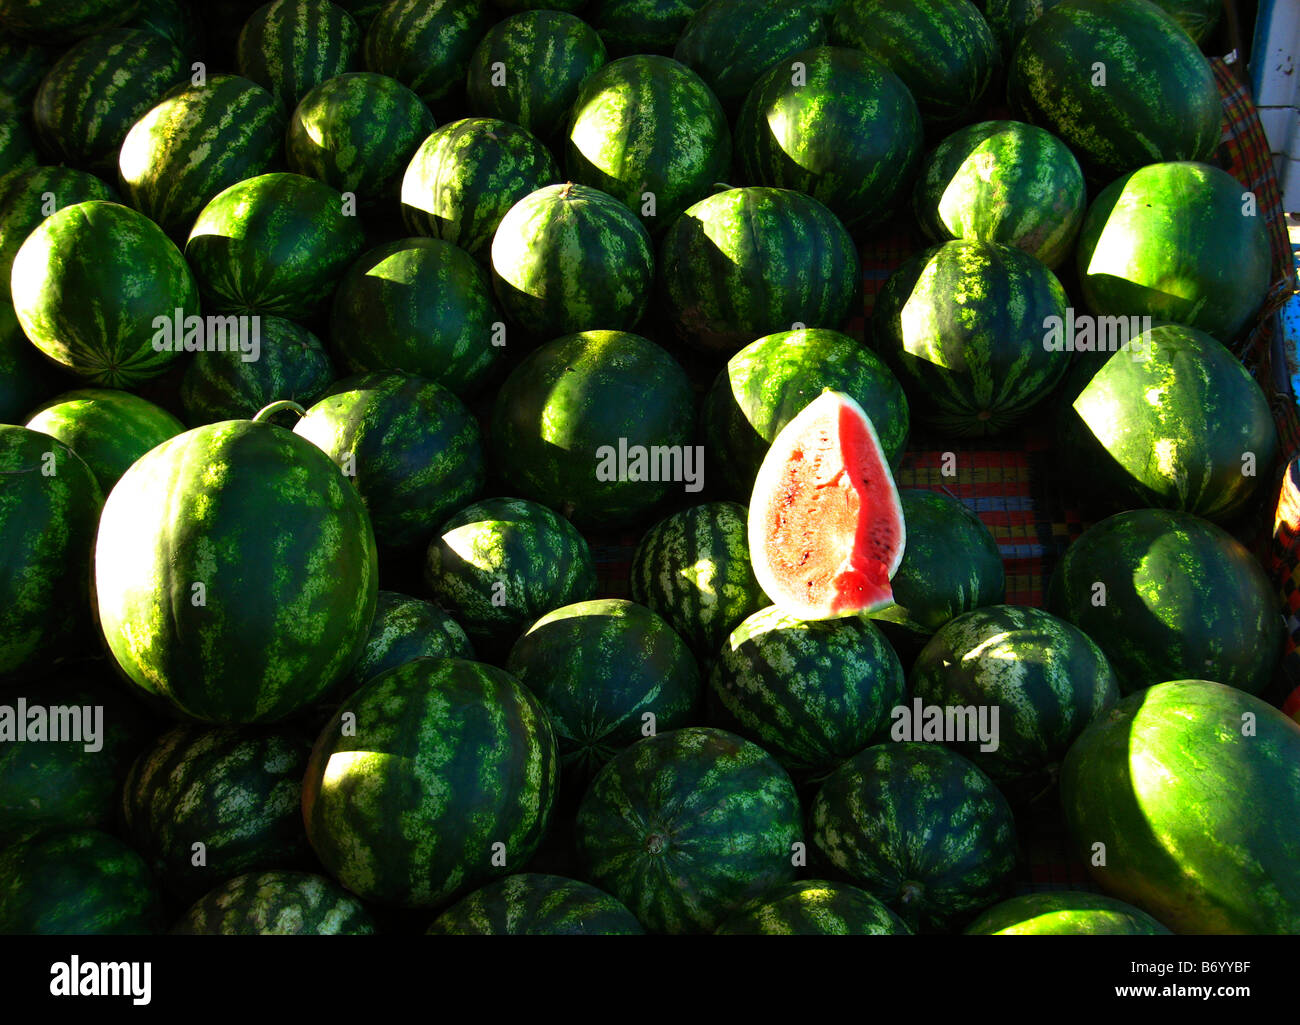 Wassermelone in der Straßenbasar Alanya Türkei Stockfotografie - Alamy